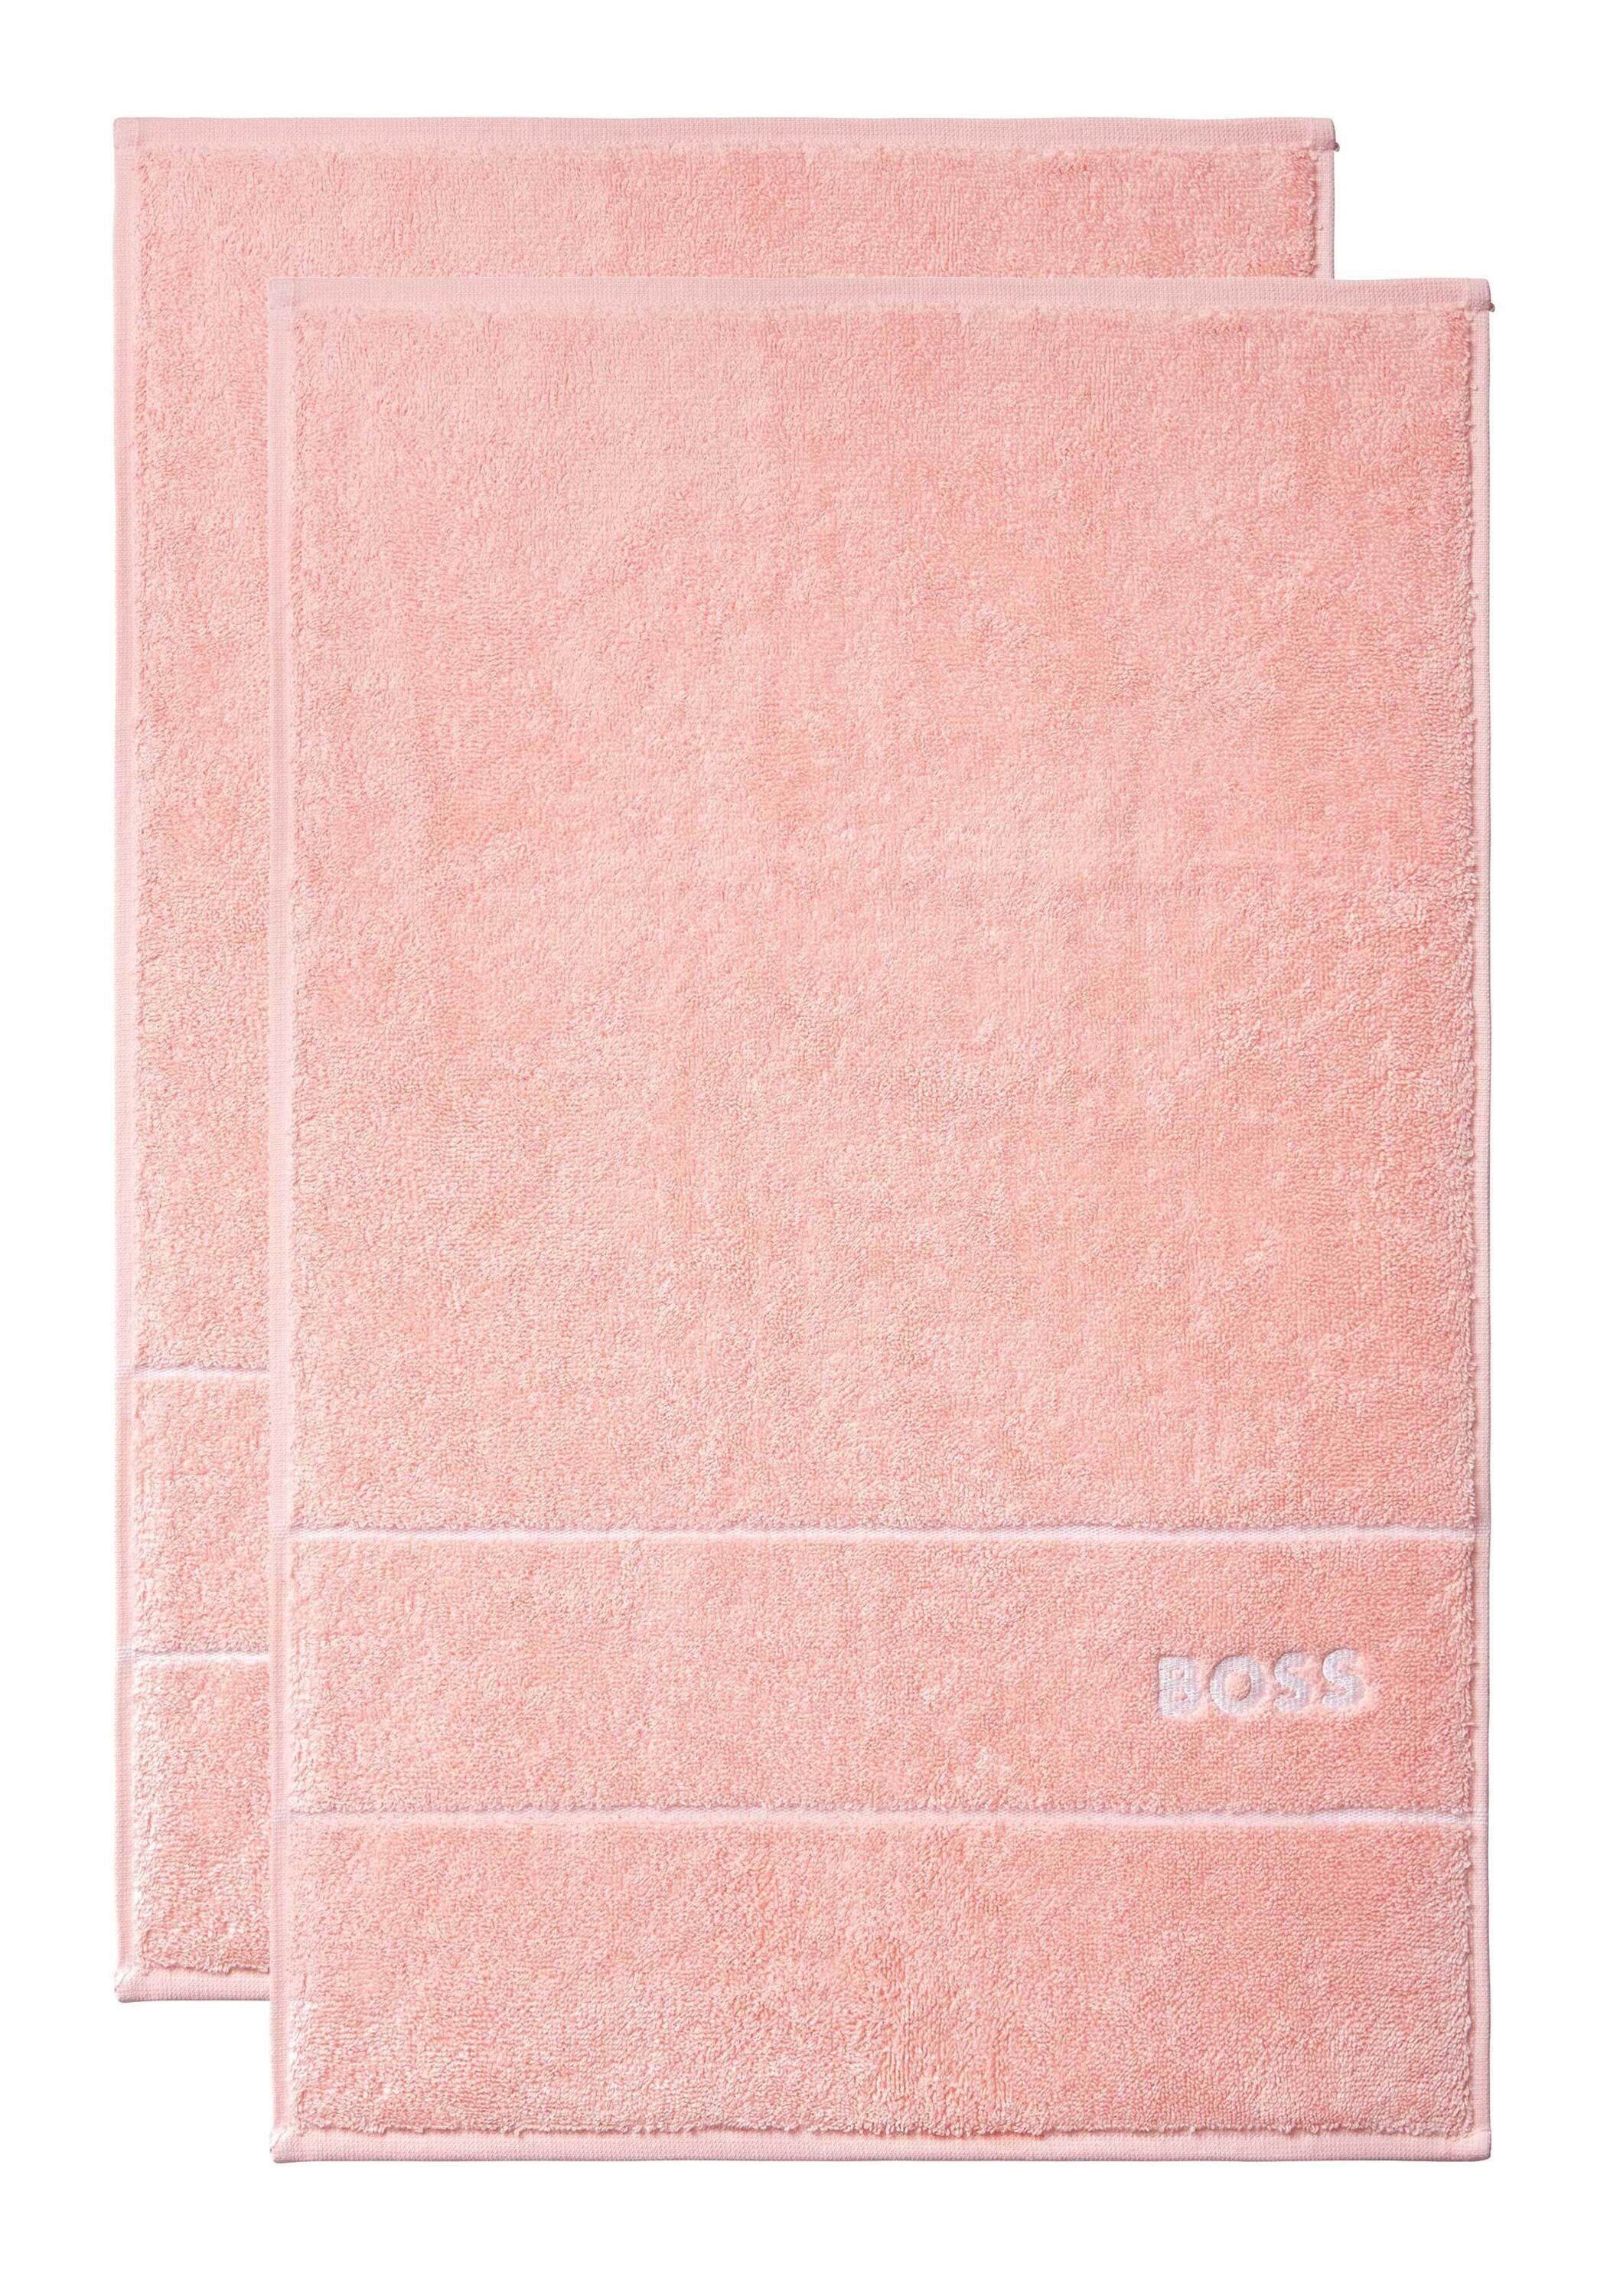 Hugo Boss Home Gästehandtücher PLAIN PRIMRON mit 100% (2tlg), modernem Baumwolle, Design